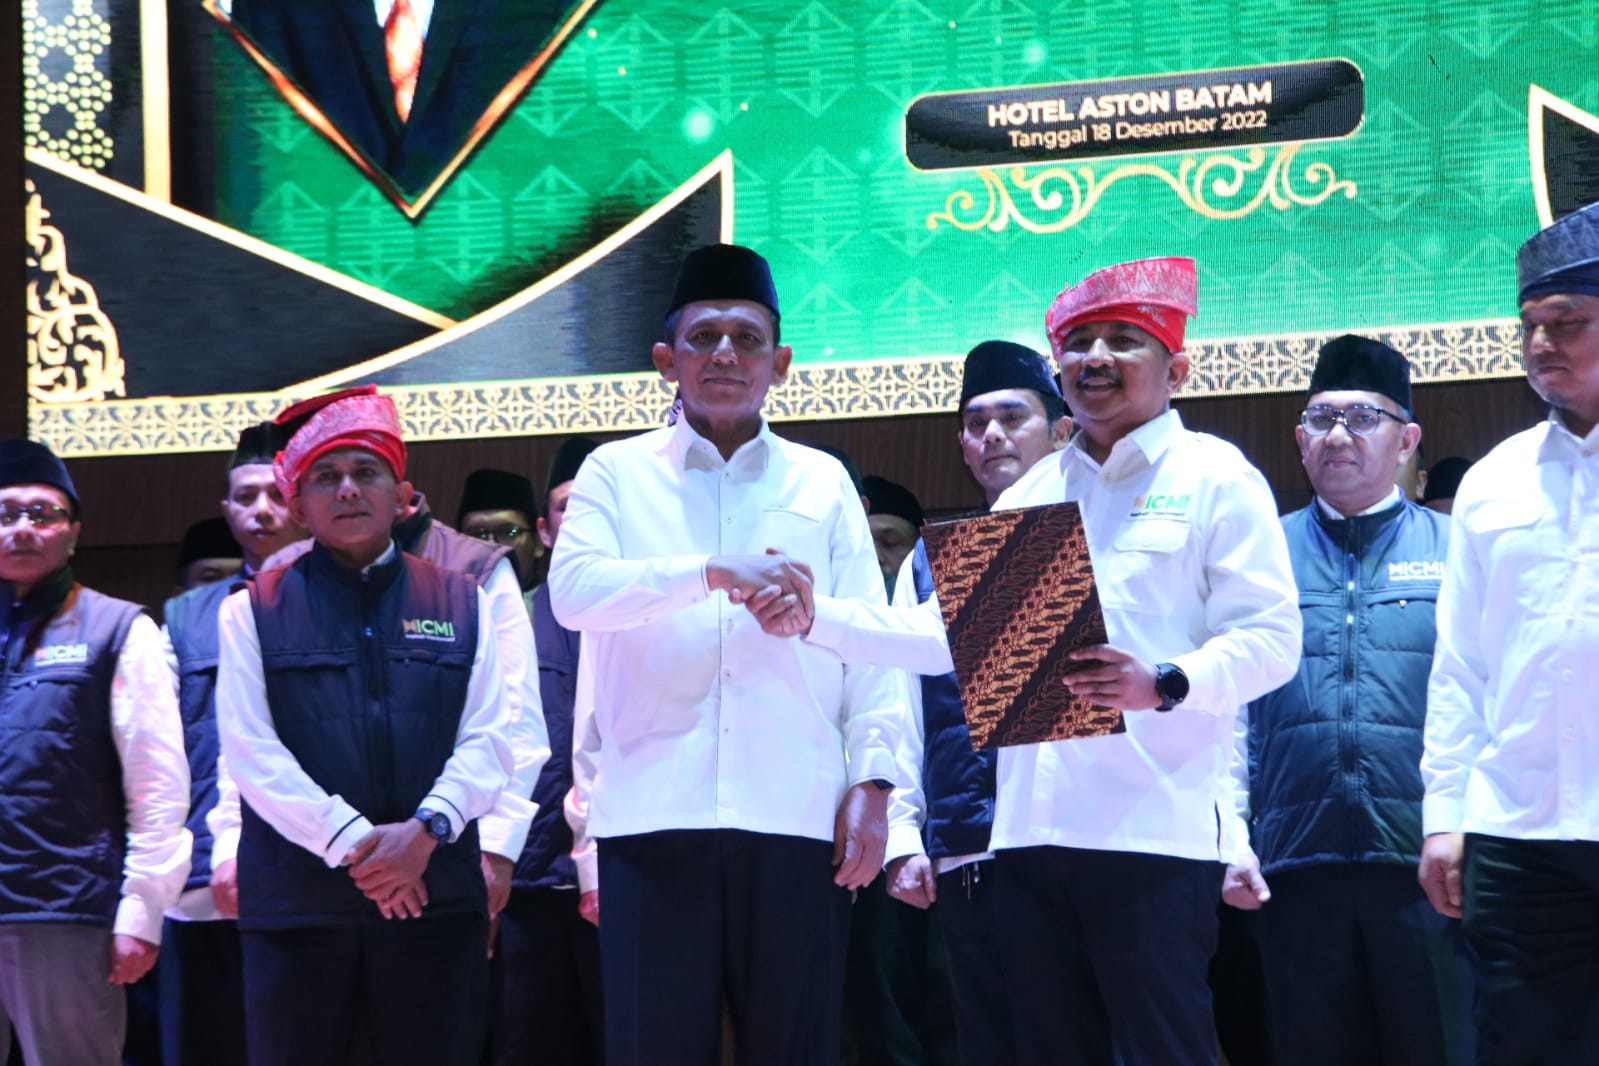 Gubernur Kepulauan Riau H. Ansar Ahmad saat melantik Majelis Pengurus ICMI Organisasi Daerah Kota Batam, di Ballroom Hotel Aston Kota Batam, Ahad (18/12) malam.